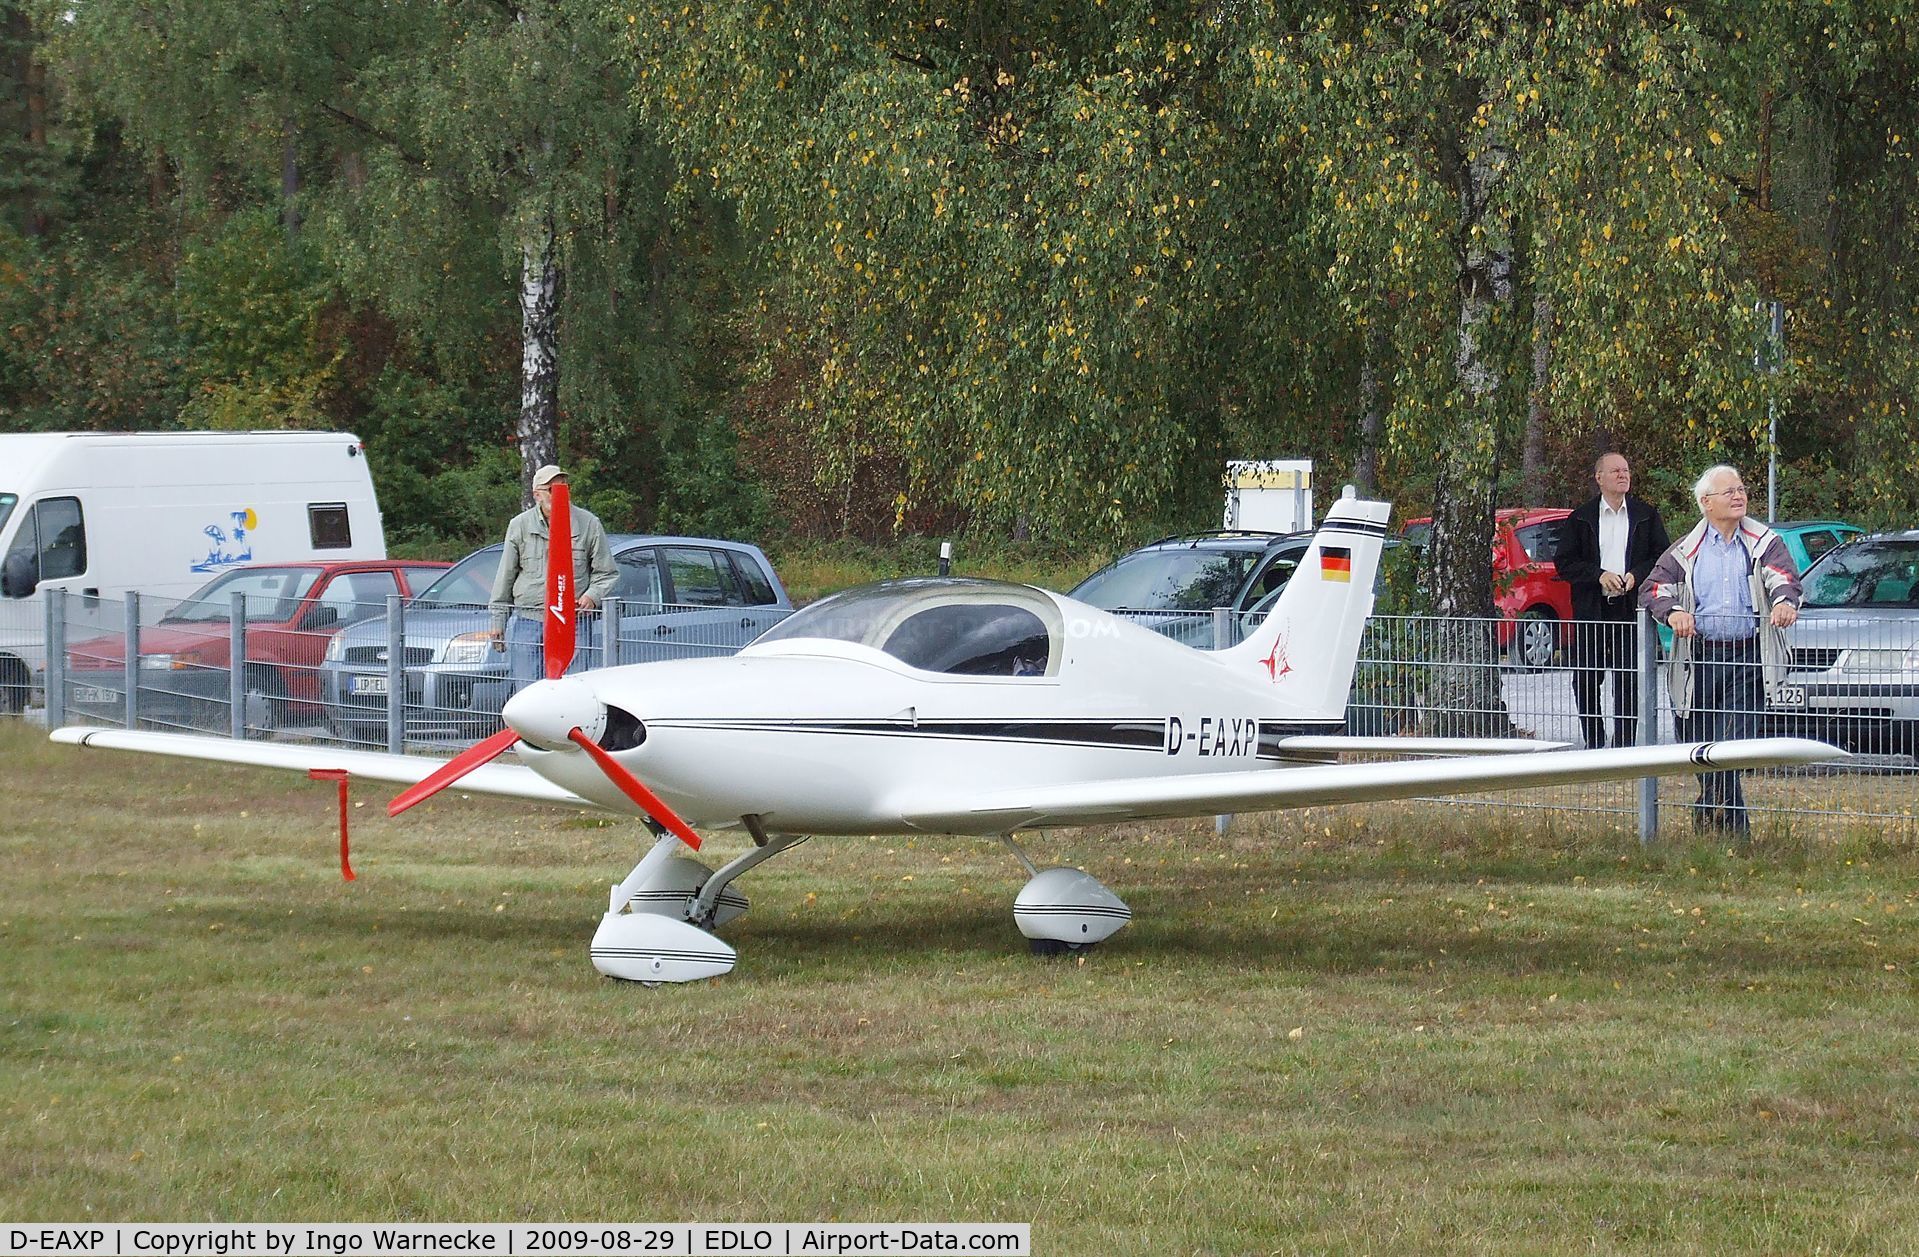 D-EAXP, Aero Designs Pulsar XP C/N 1809, Aero Designs (Korte) Pulsar XP at the 2009 OUV-Meeting at Oerlinghausen airfield